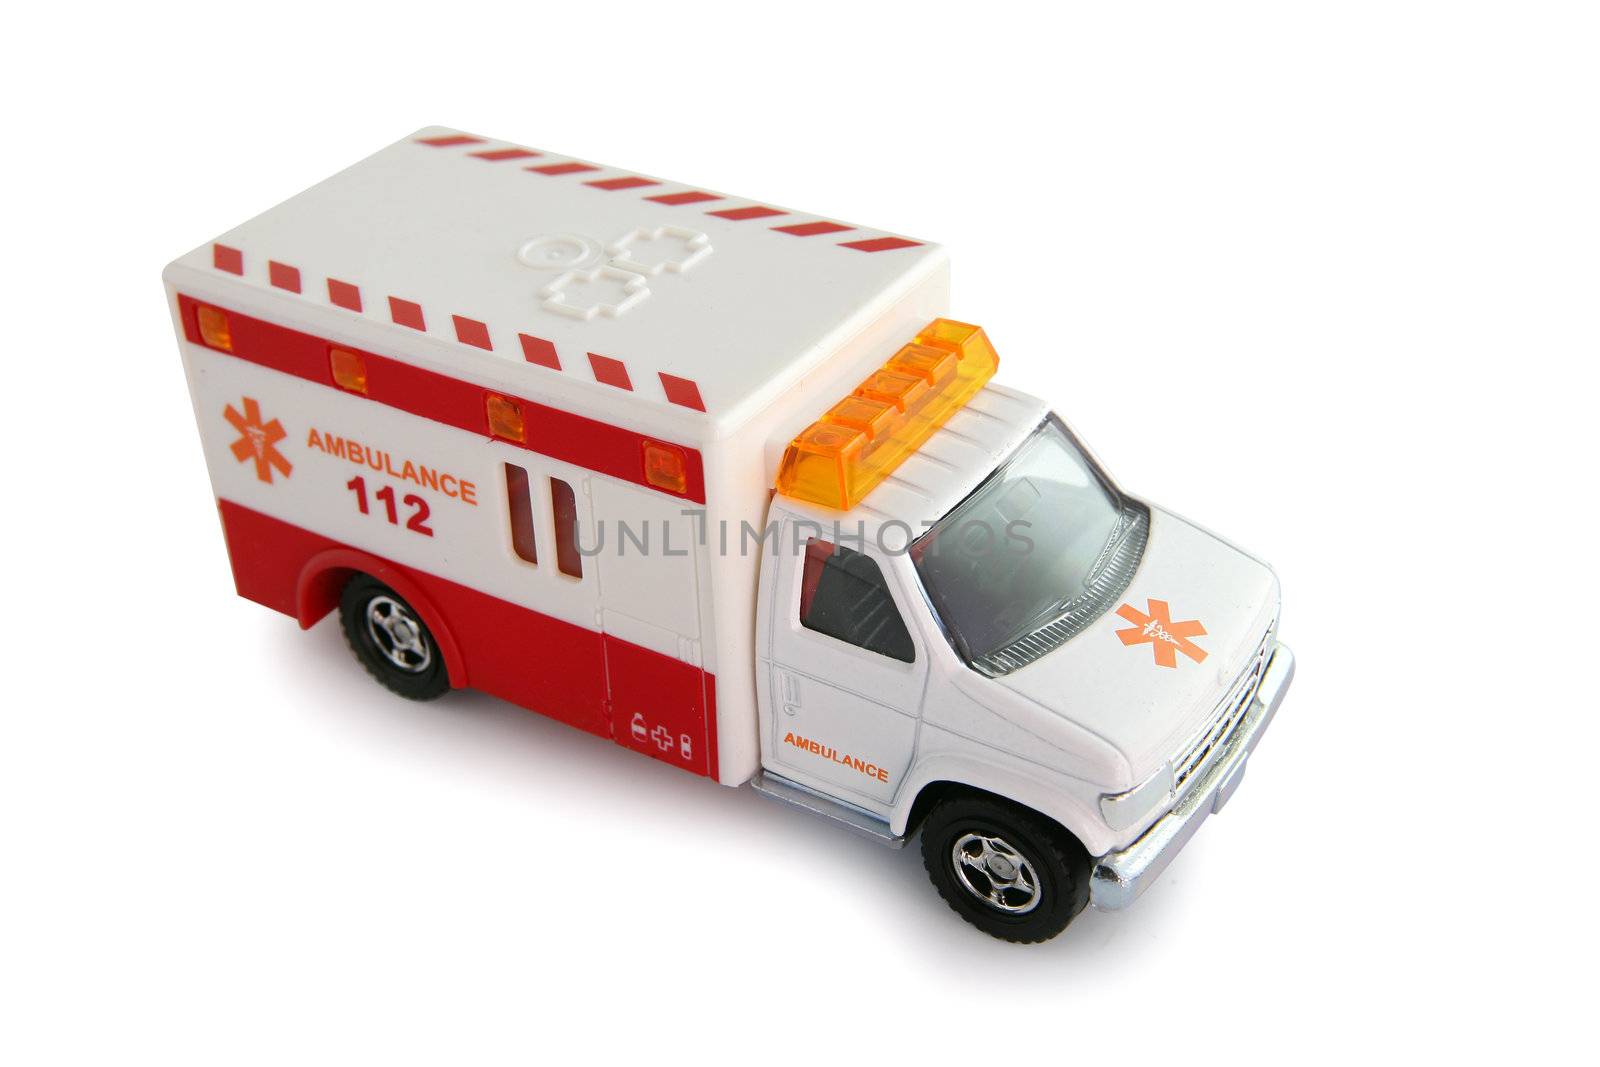 Toy ambulance by phovoir